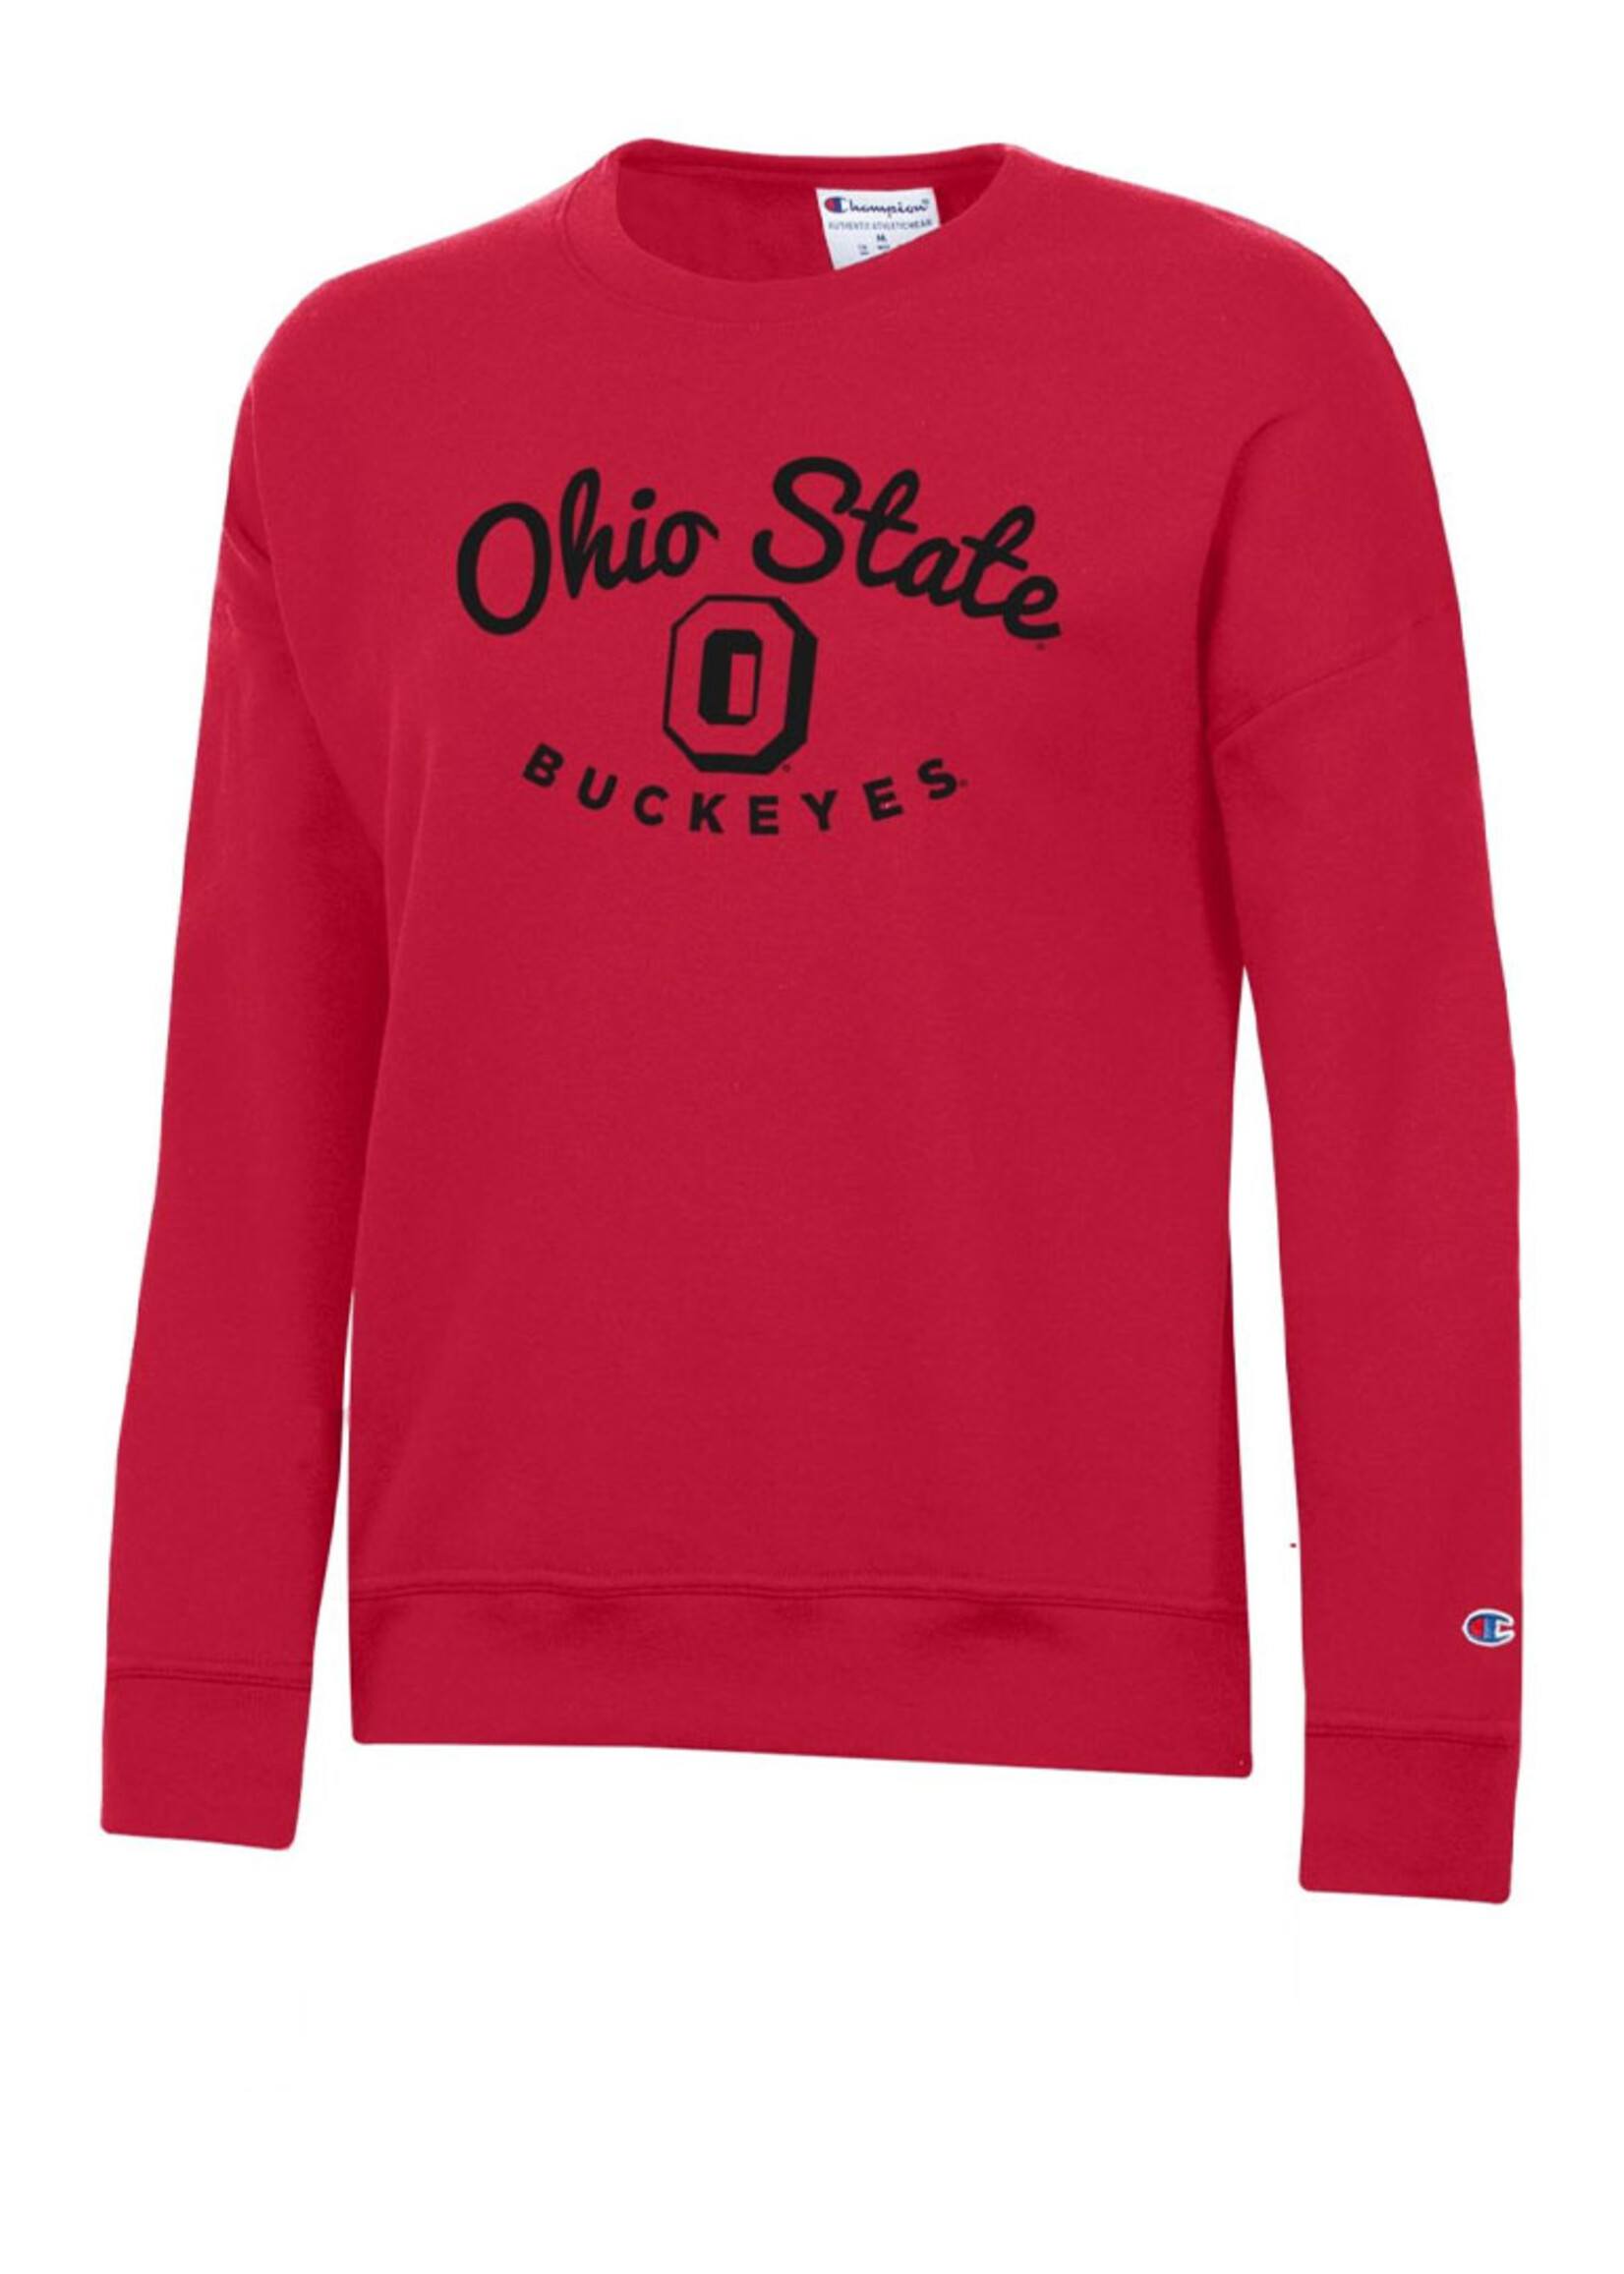 Ohio State Buckeyes Women's Block O Sweatshirt